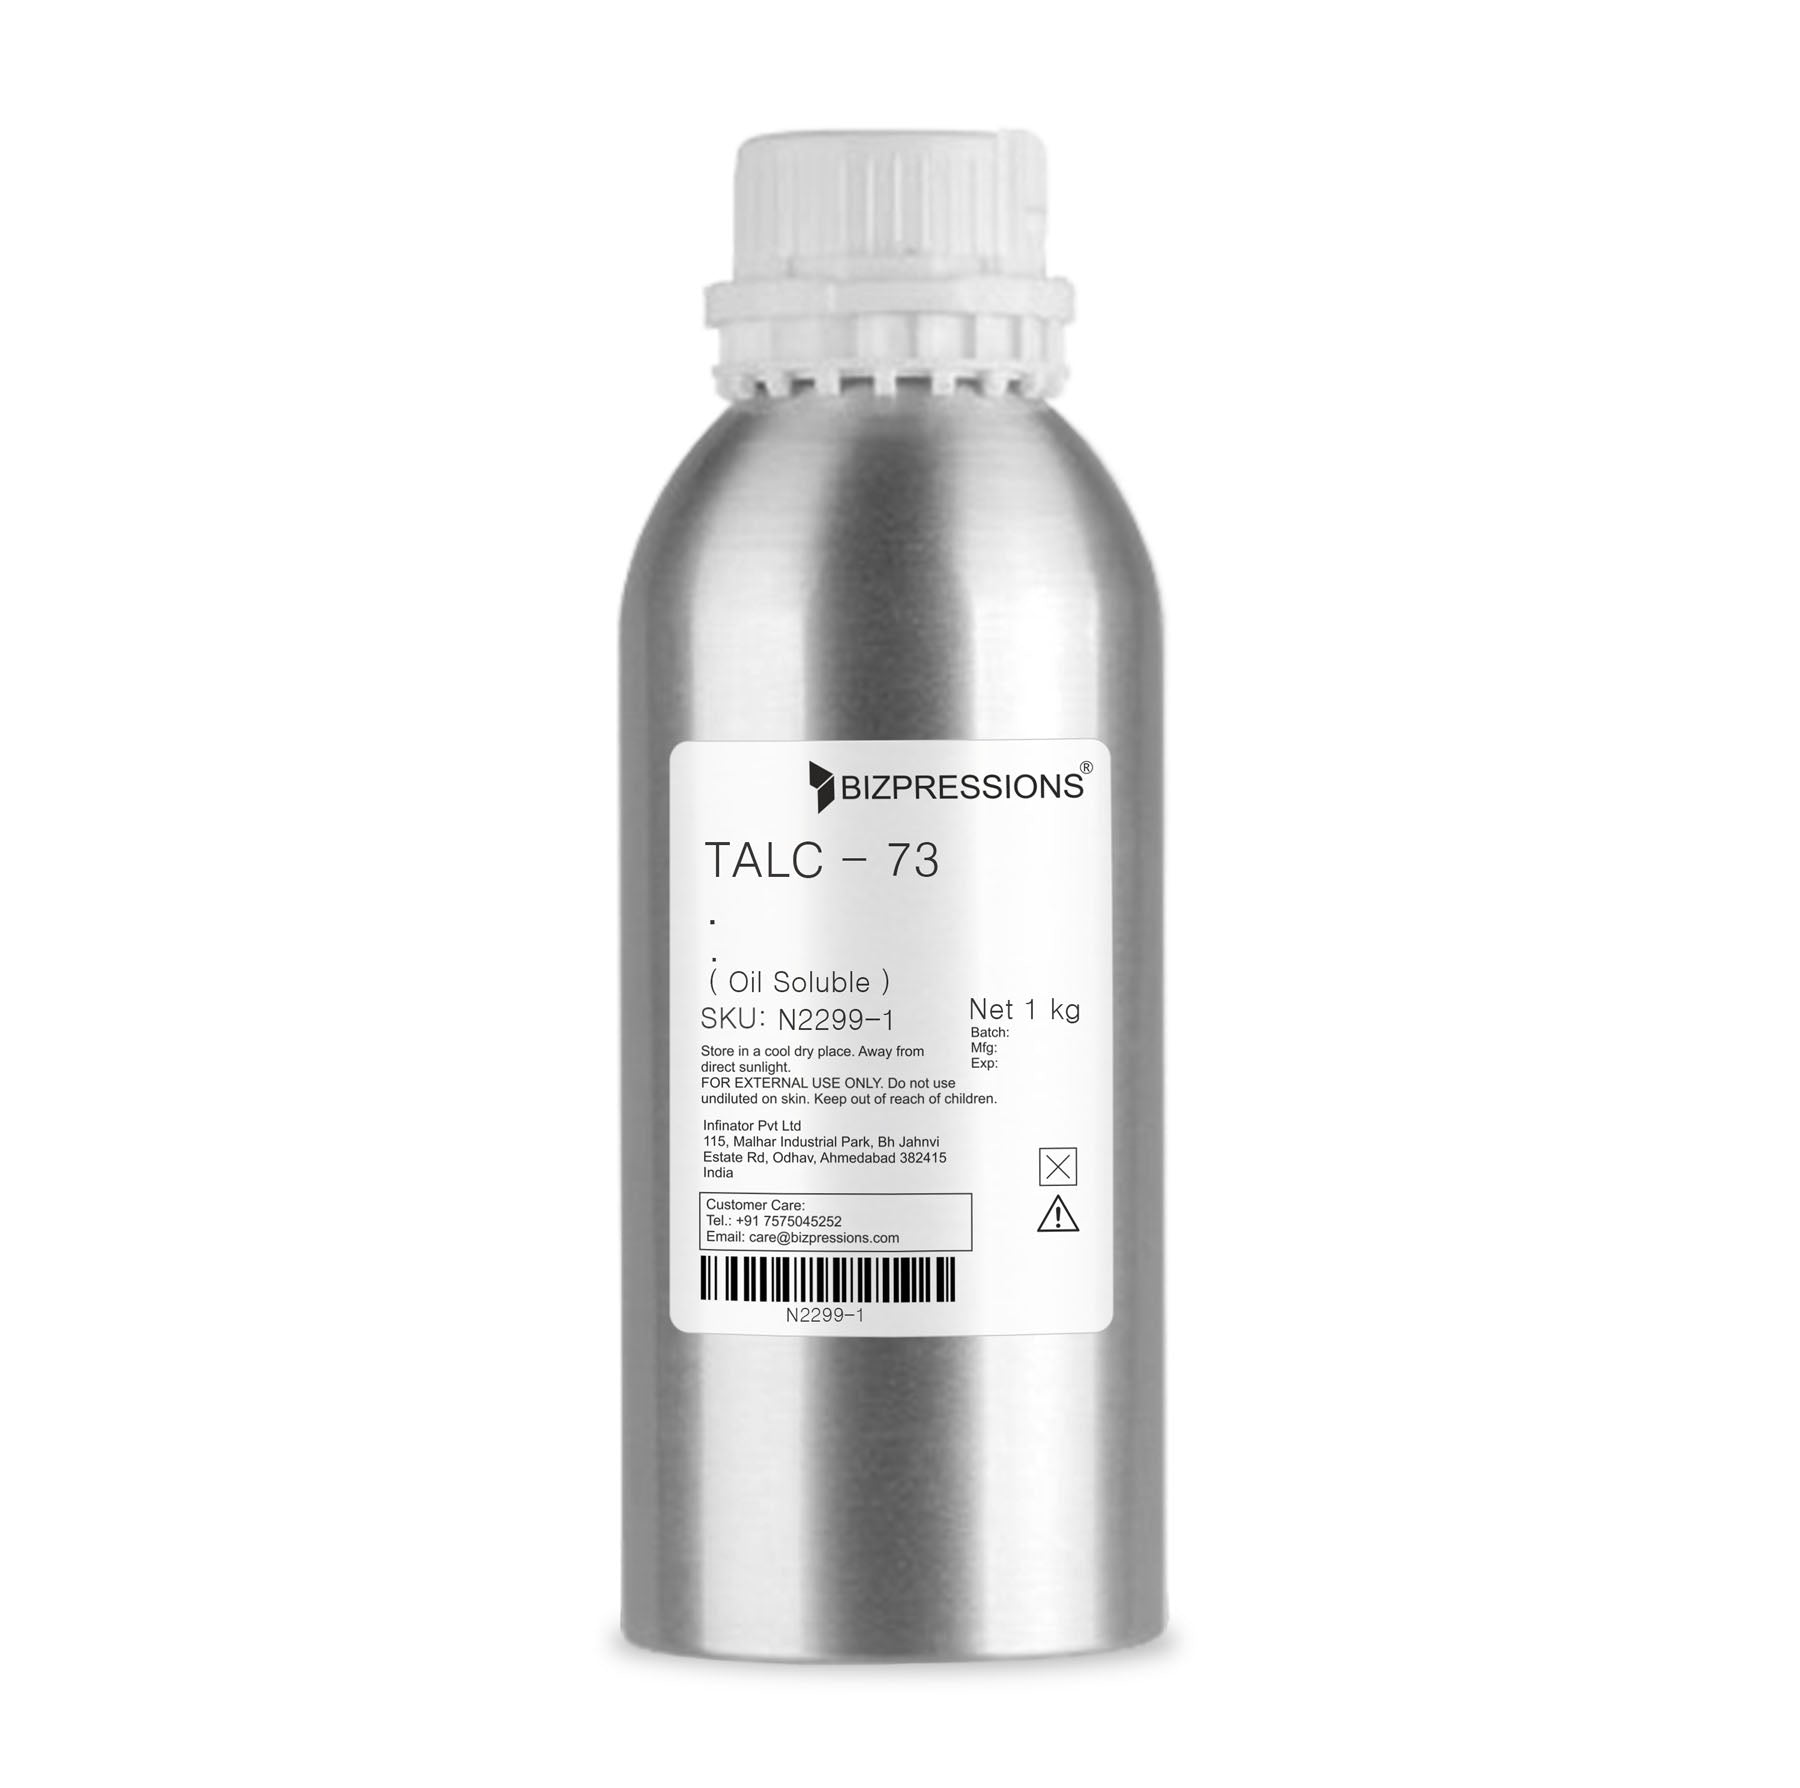 TALC - 73 - Fragrance ( Oil Soluble ) - 1 kg